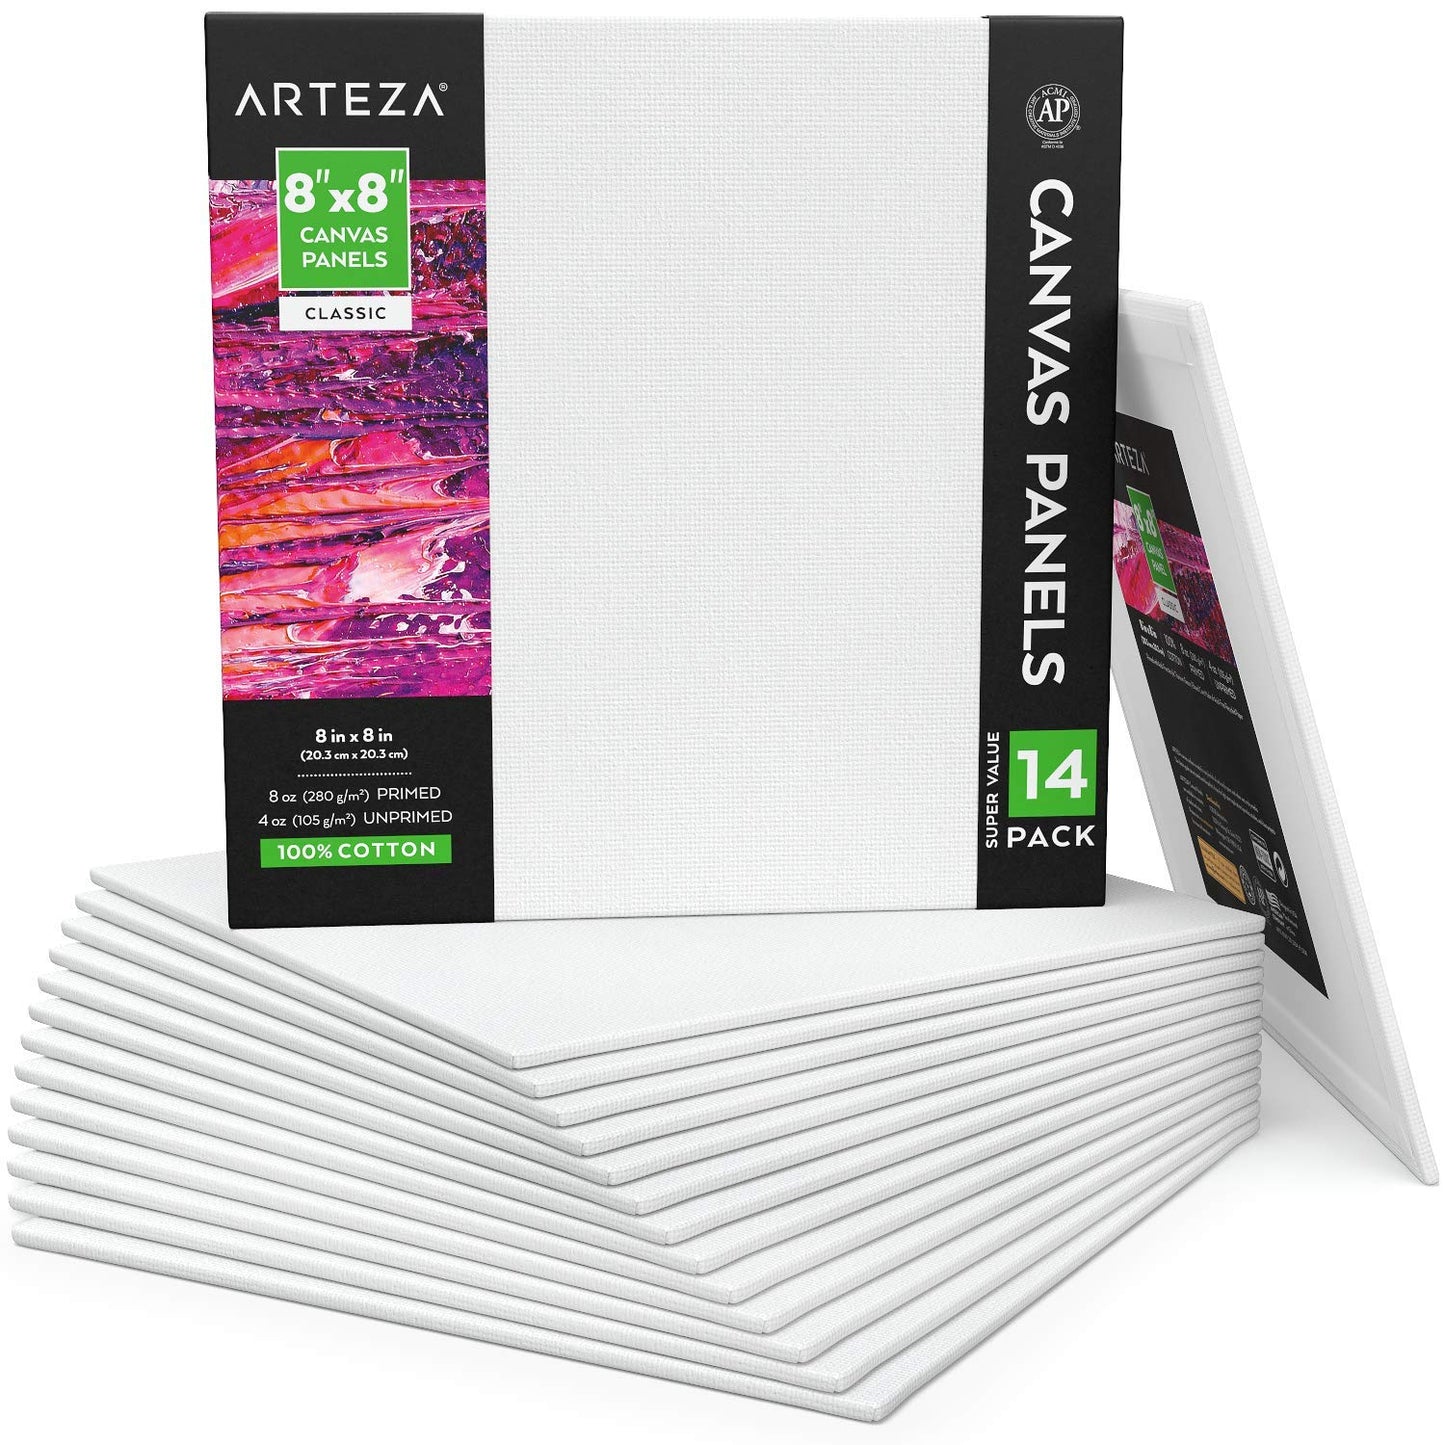 Arteza Classic Canvas Panels, 8" x 8" - 12.3 oz Gesso-Primed - Pack of 14